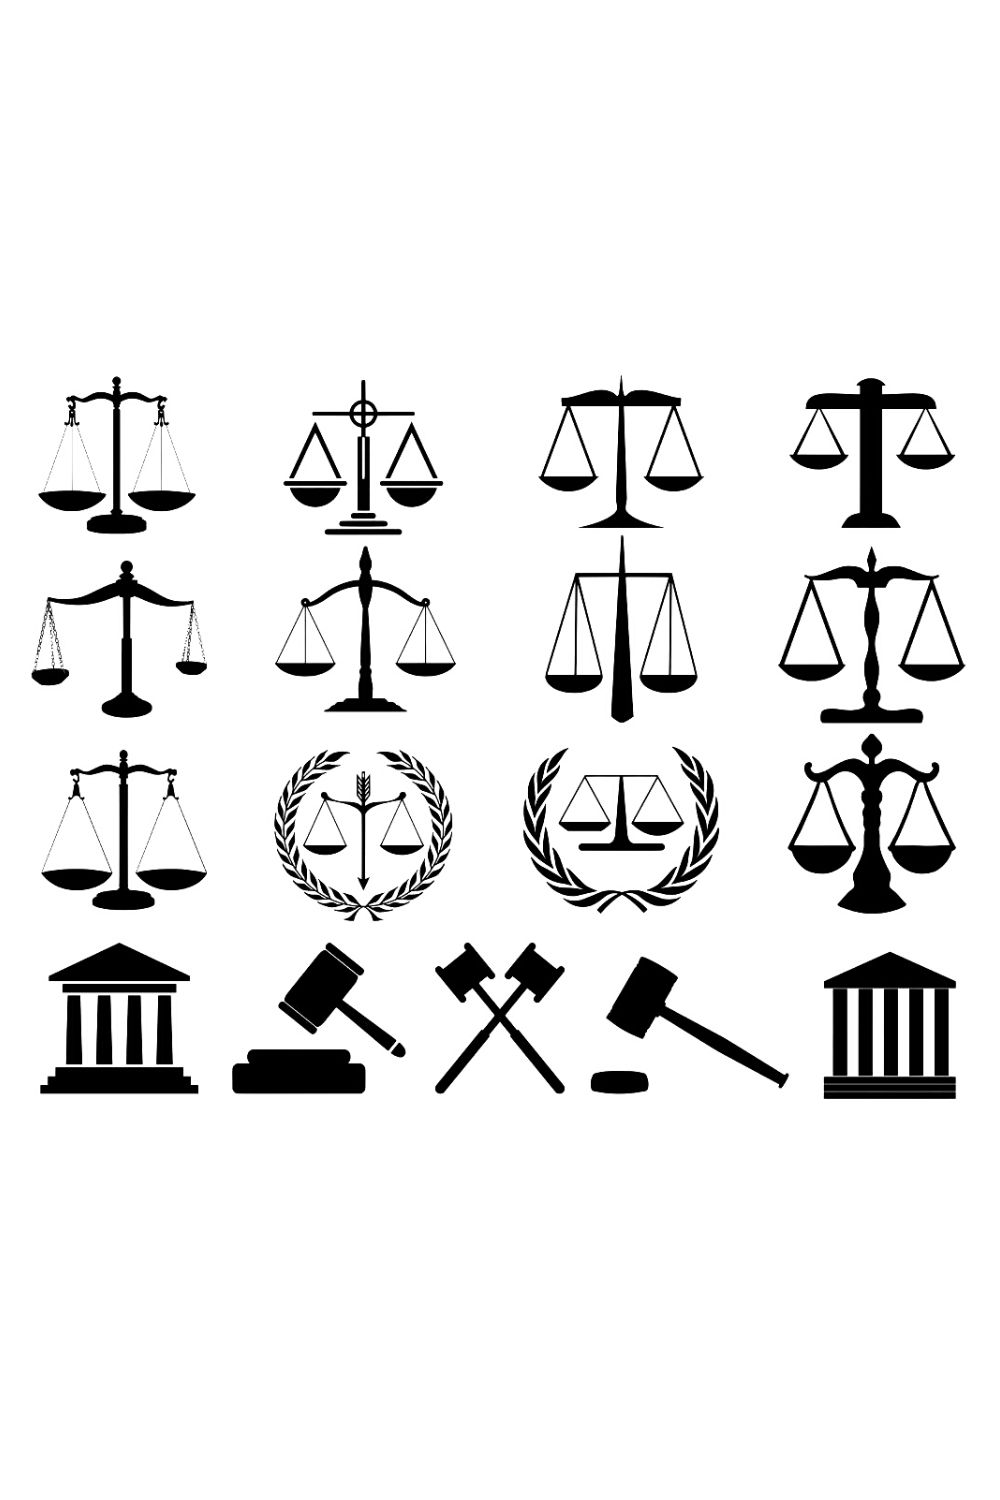 Justice Scales Silhouette Logo Bundles pinterest image.